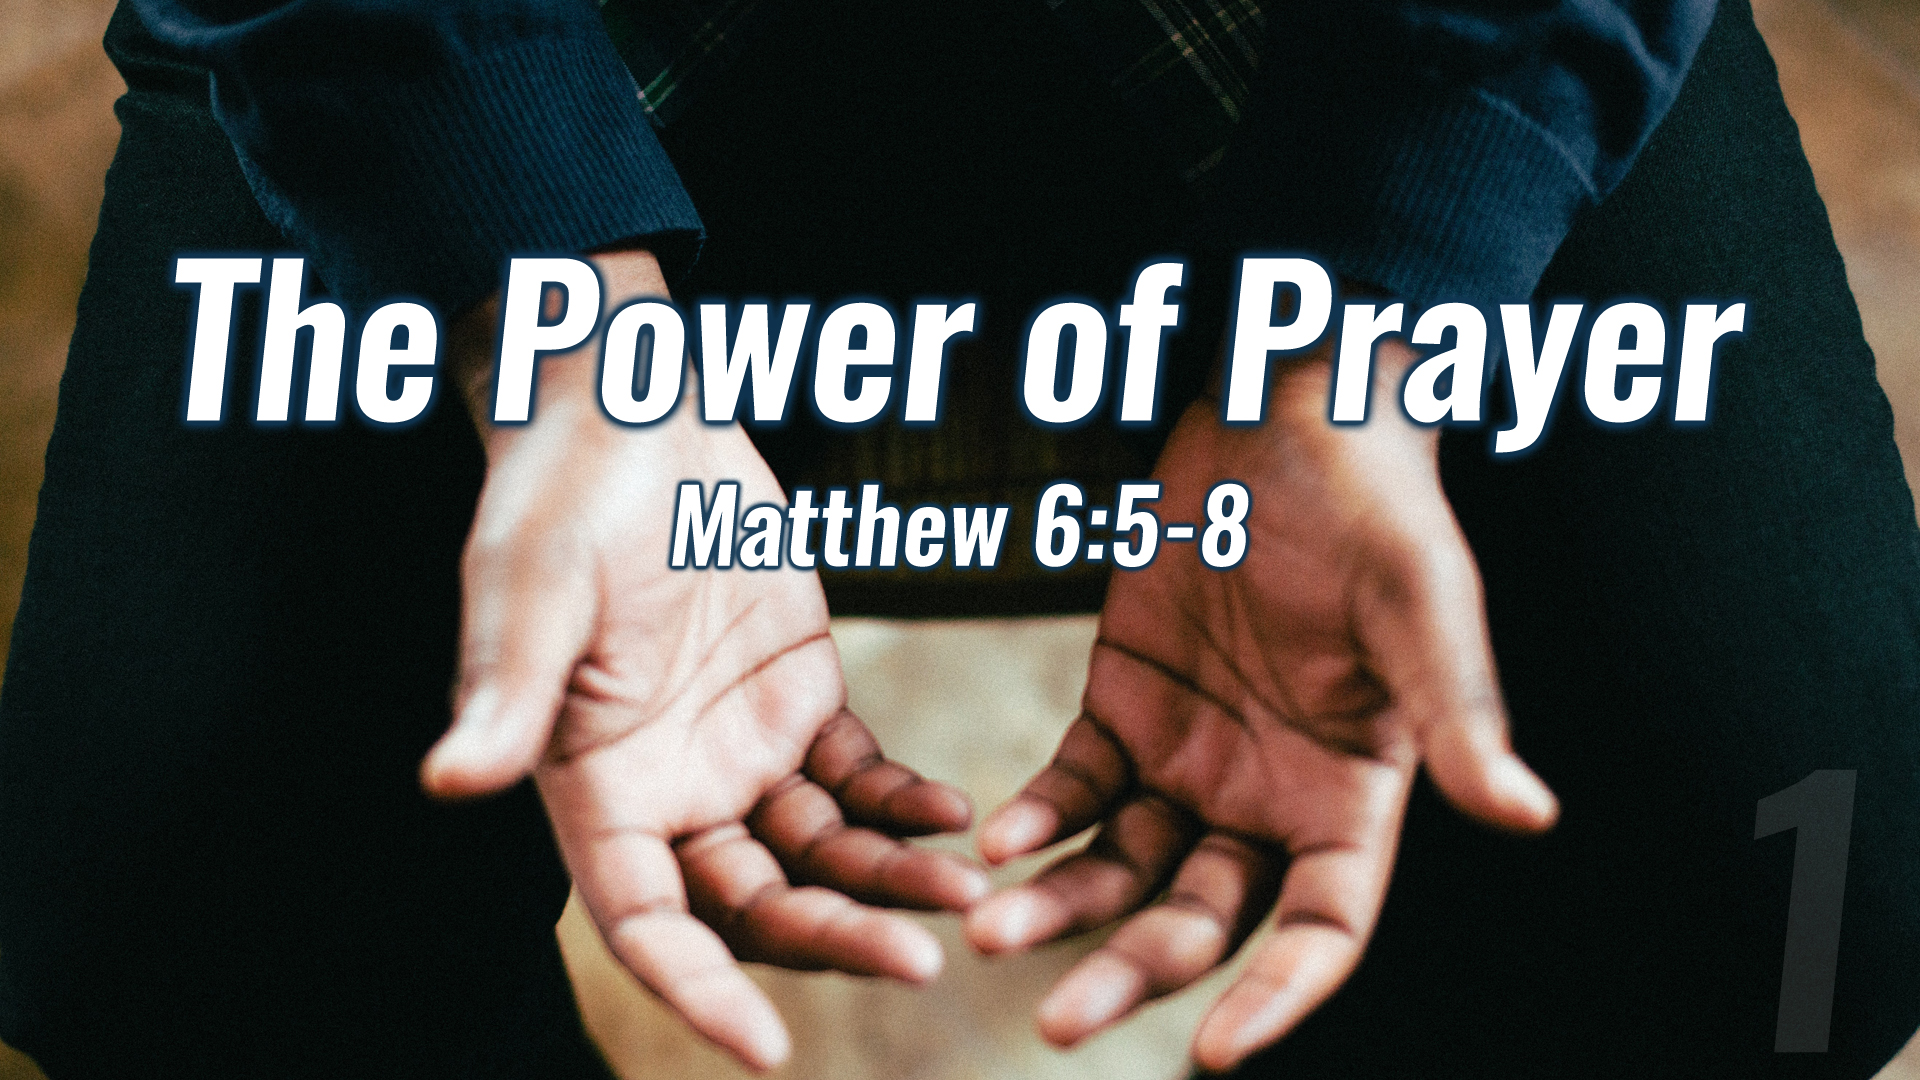 The Power of Prayer, Part 1